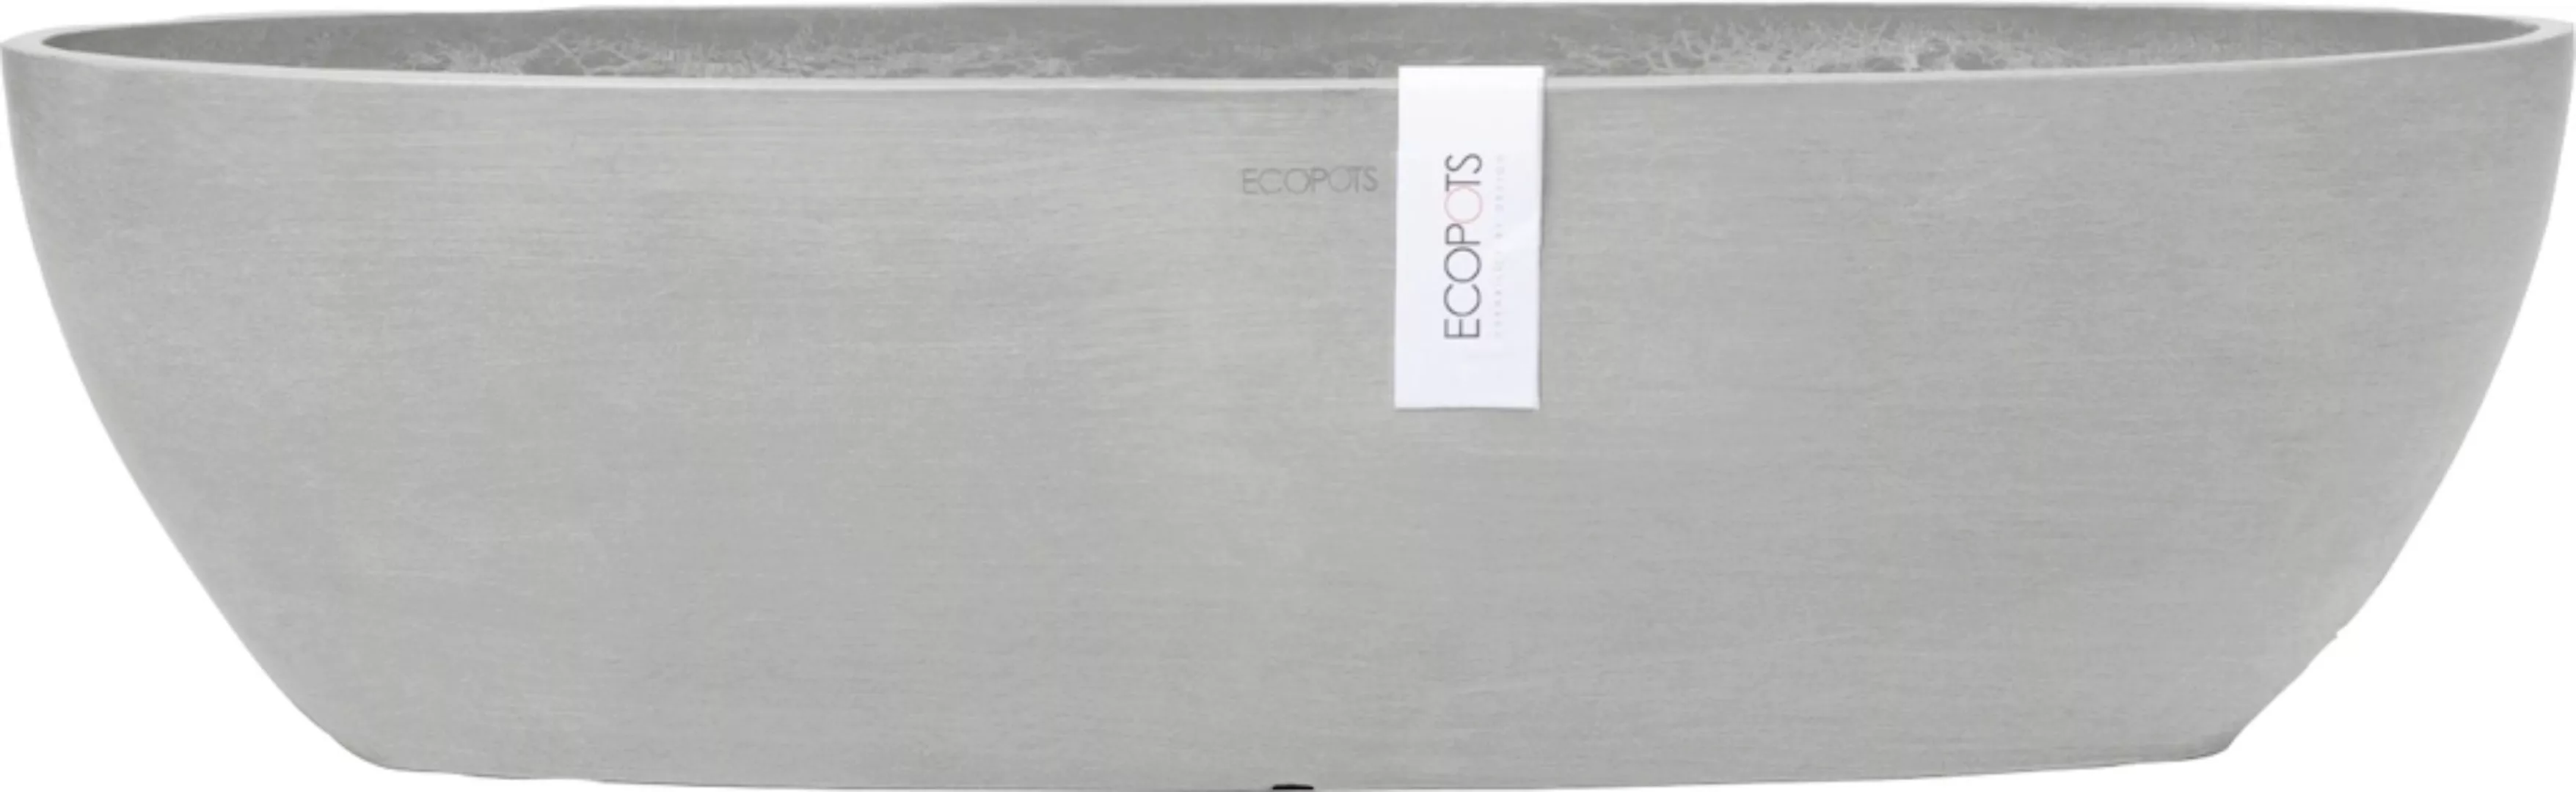 Ecopots Pflanzschale Sofia Lang Weißgrau 56 cm x 14 cm x 16 cm günstig online kaufen